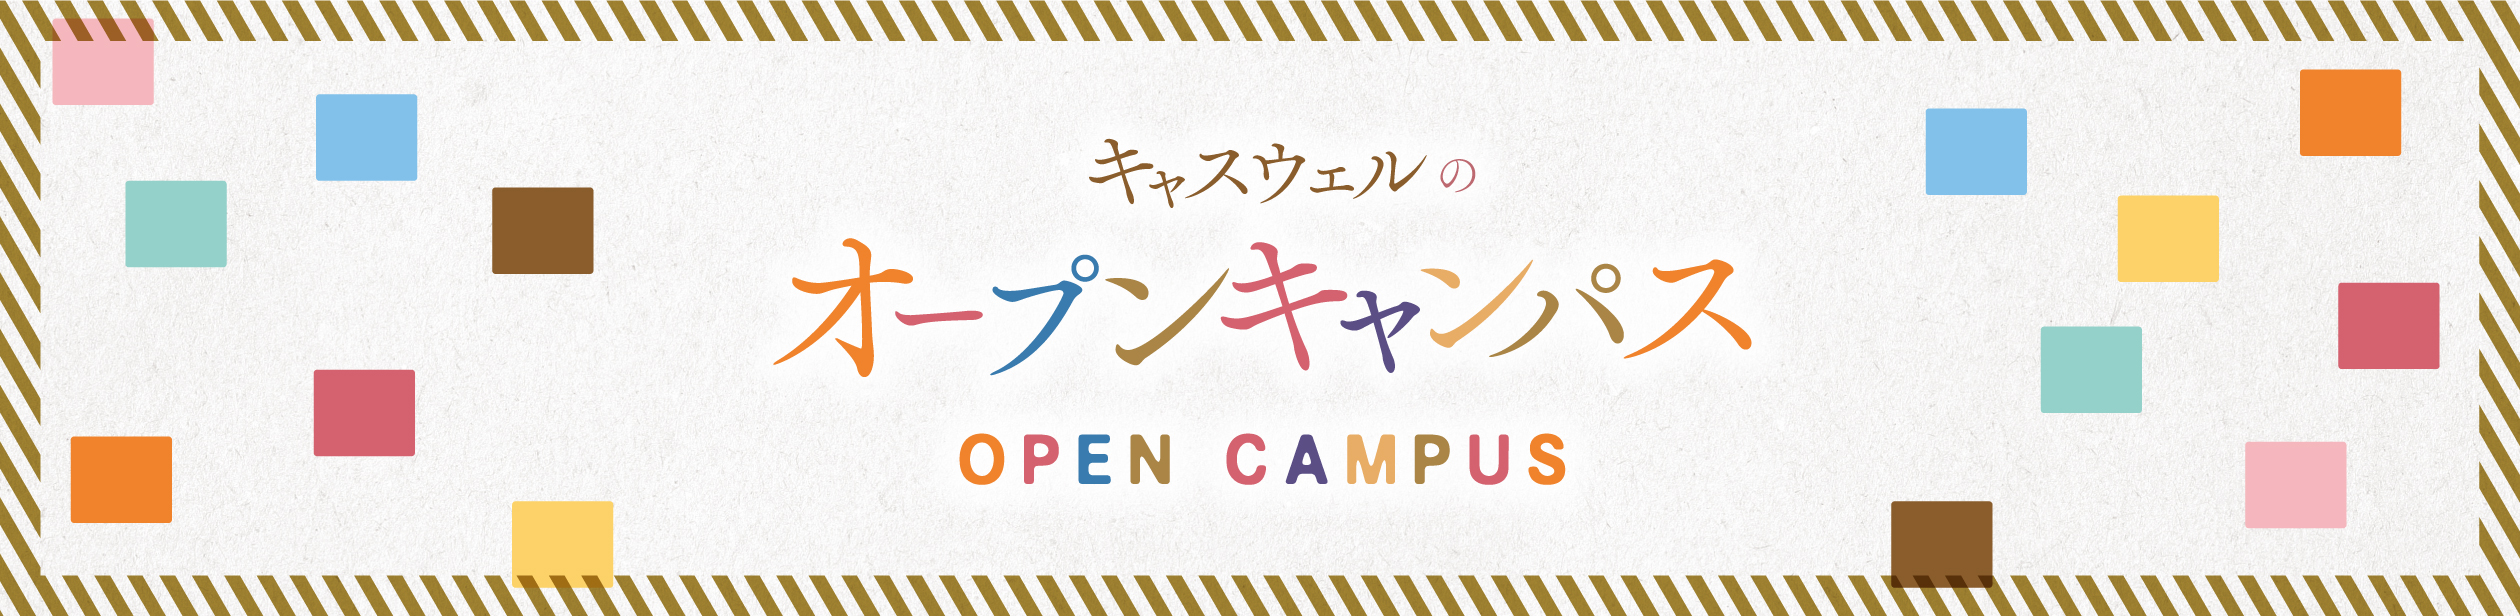 OPEN CAMPUS 冬のオープンキャンパス参加申し込み受付中!2018